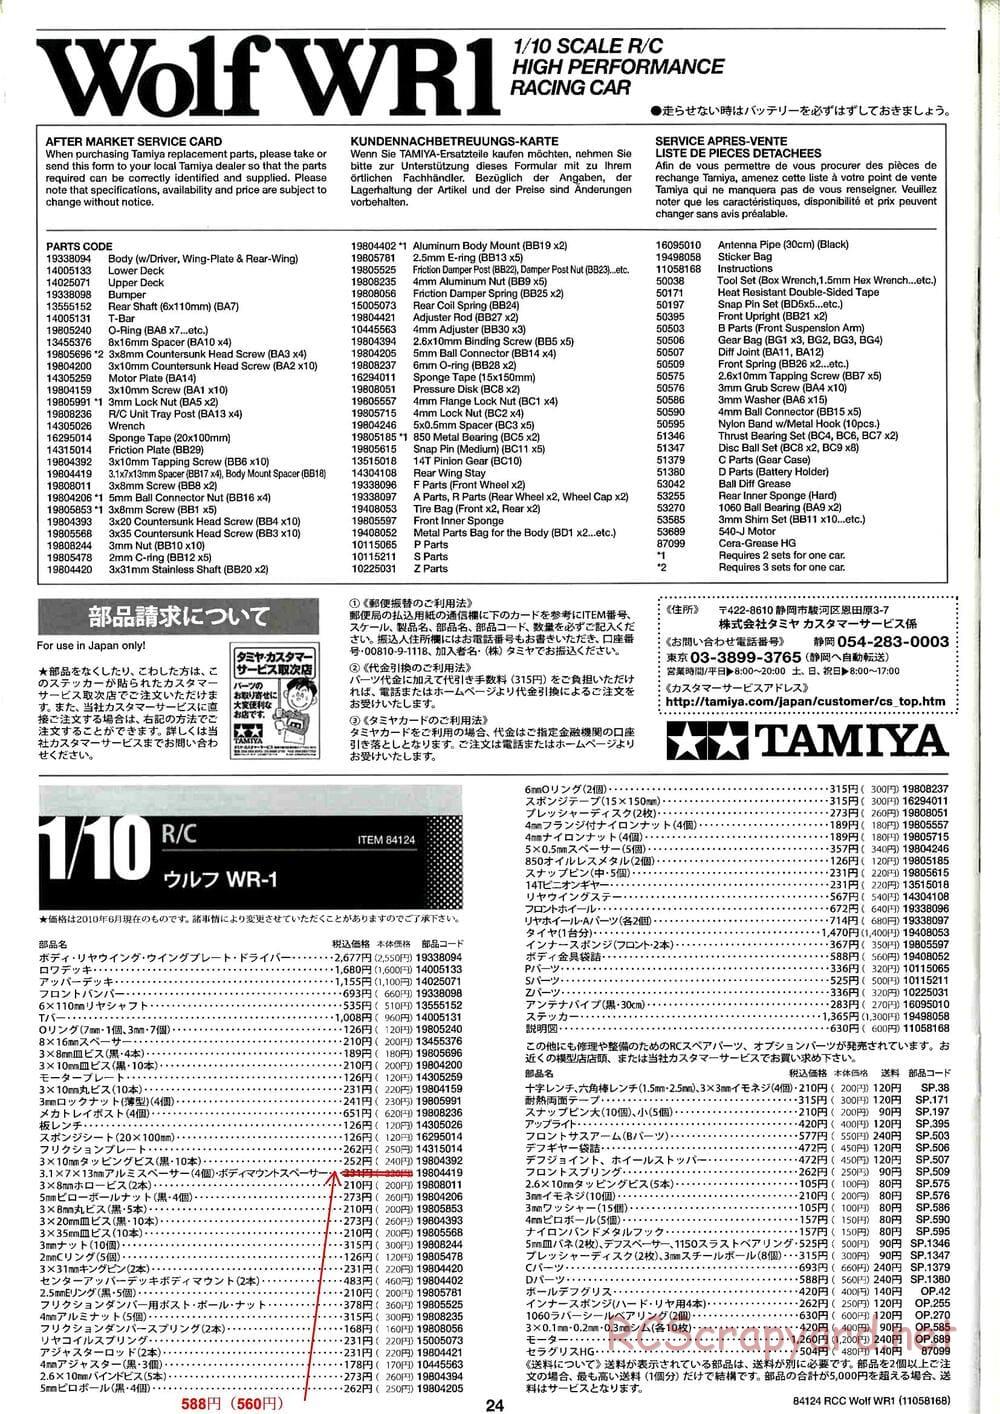 Tamiya - Wolf WR1 - F104W Chassis - Manual - Page 24